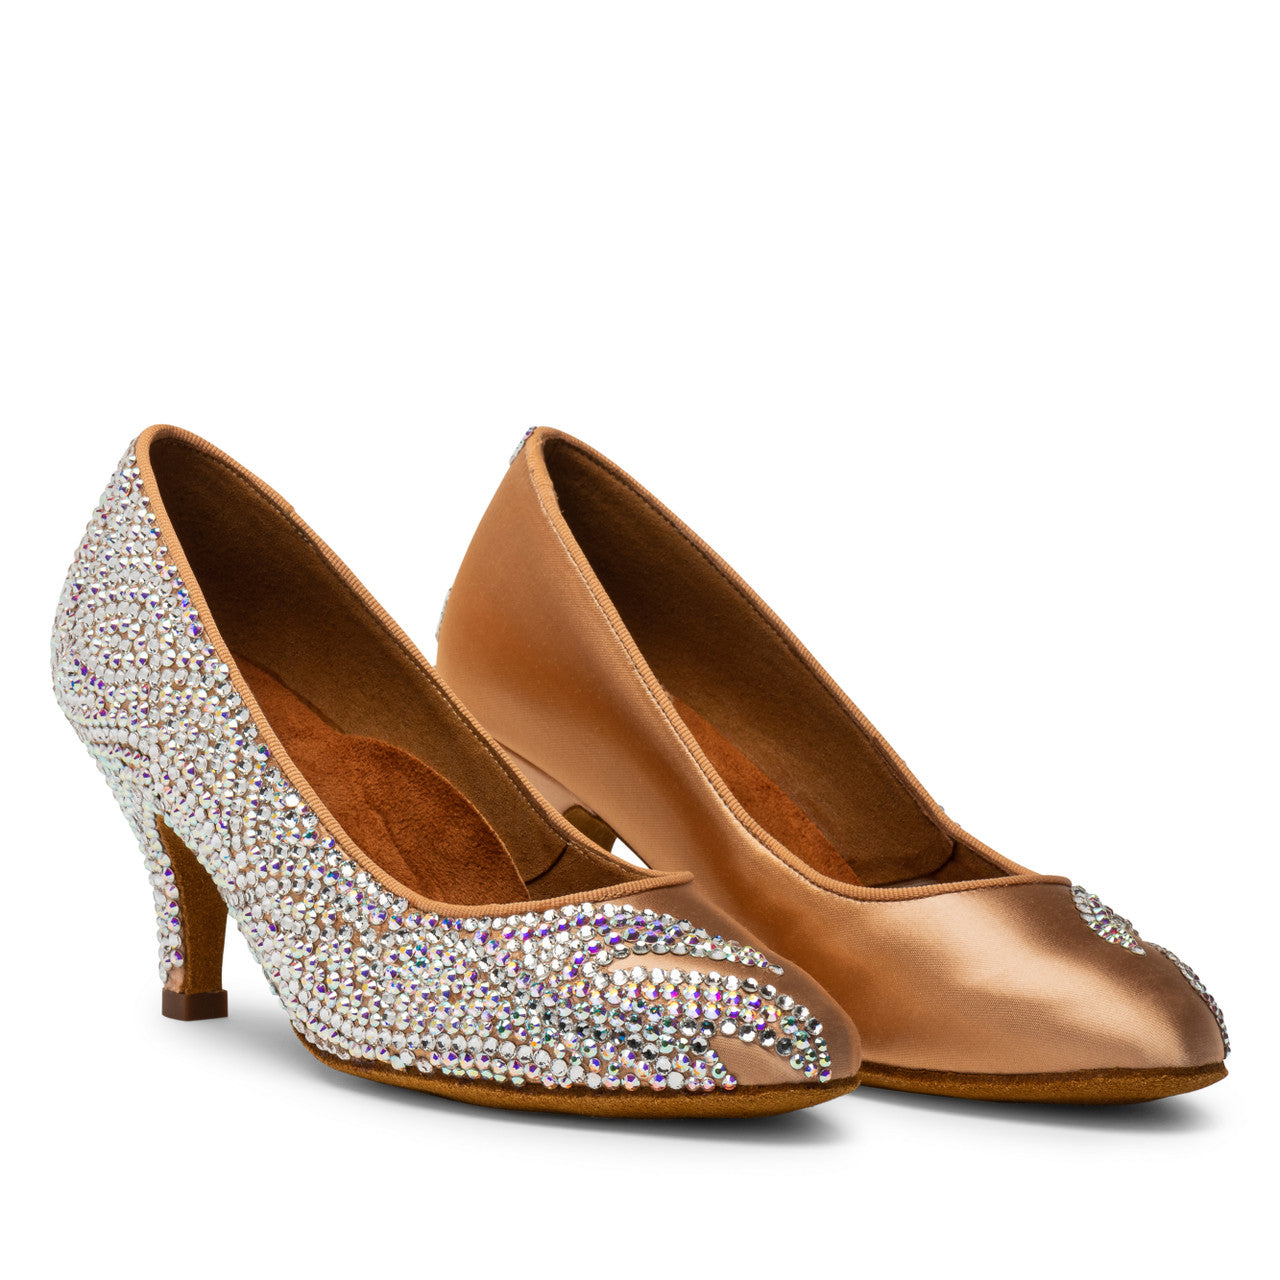 International Dance Shoes IDS Peach Satin ICS RoundToe by Lauren Ballroom Shoe Covered in Preciosa Crystals